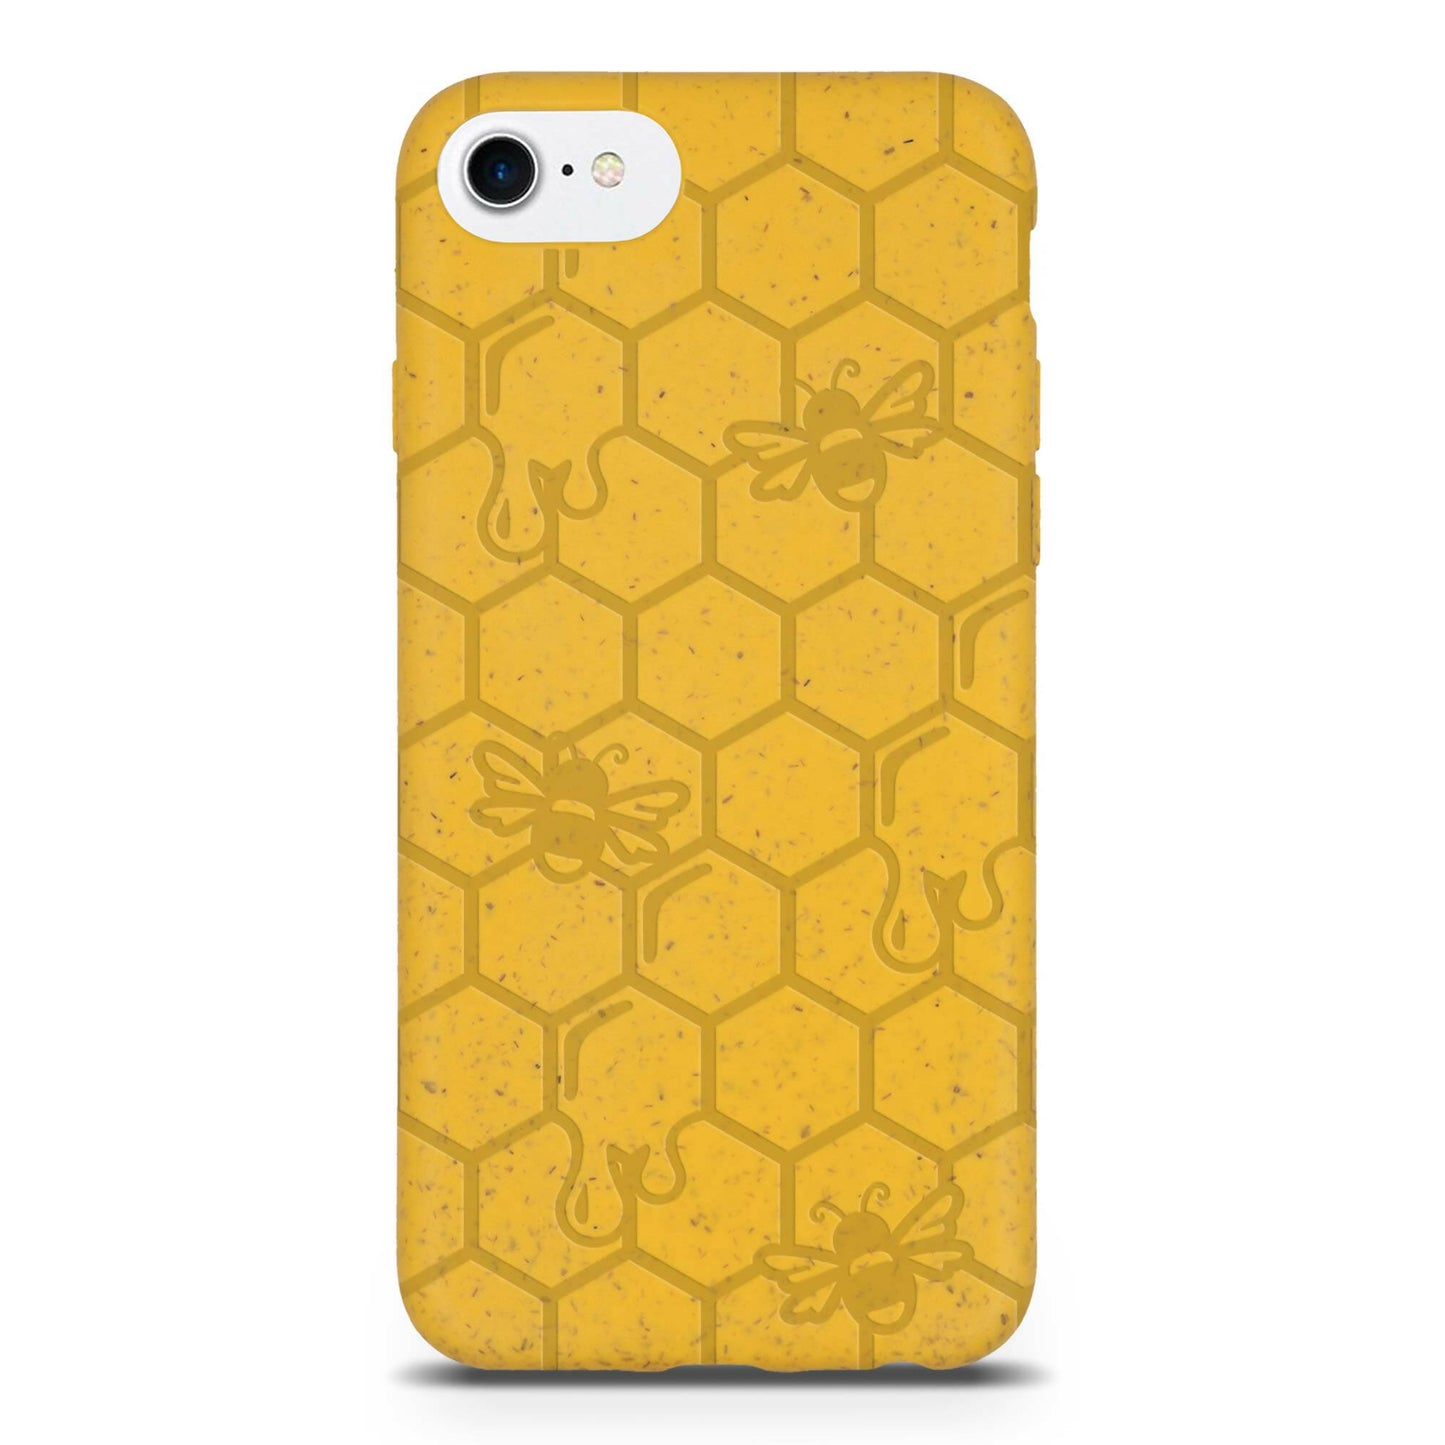 Estuche biodegradable para teléfono - Honey Bee amarillo, naranja y negro